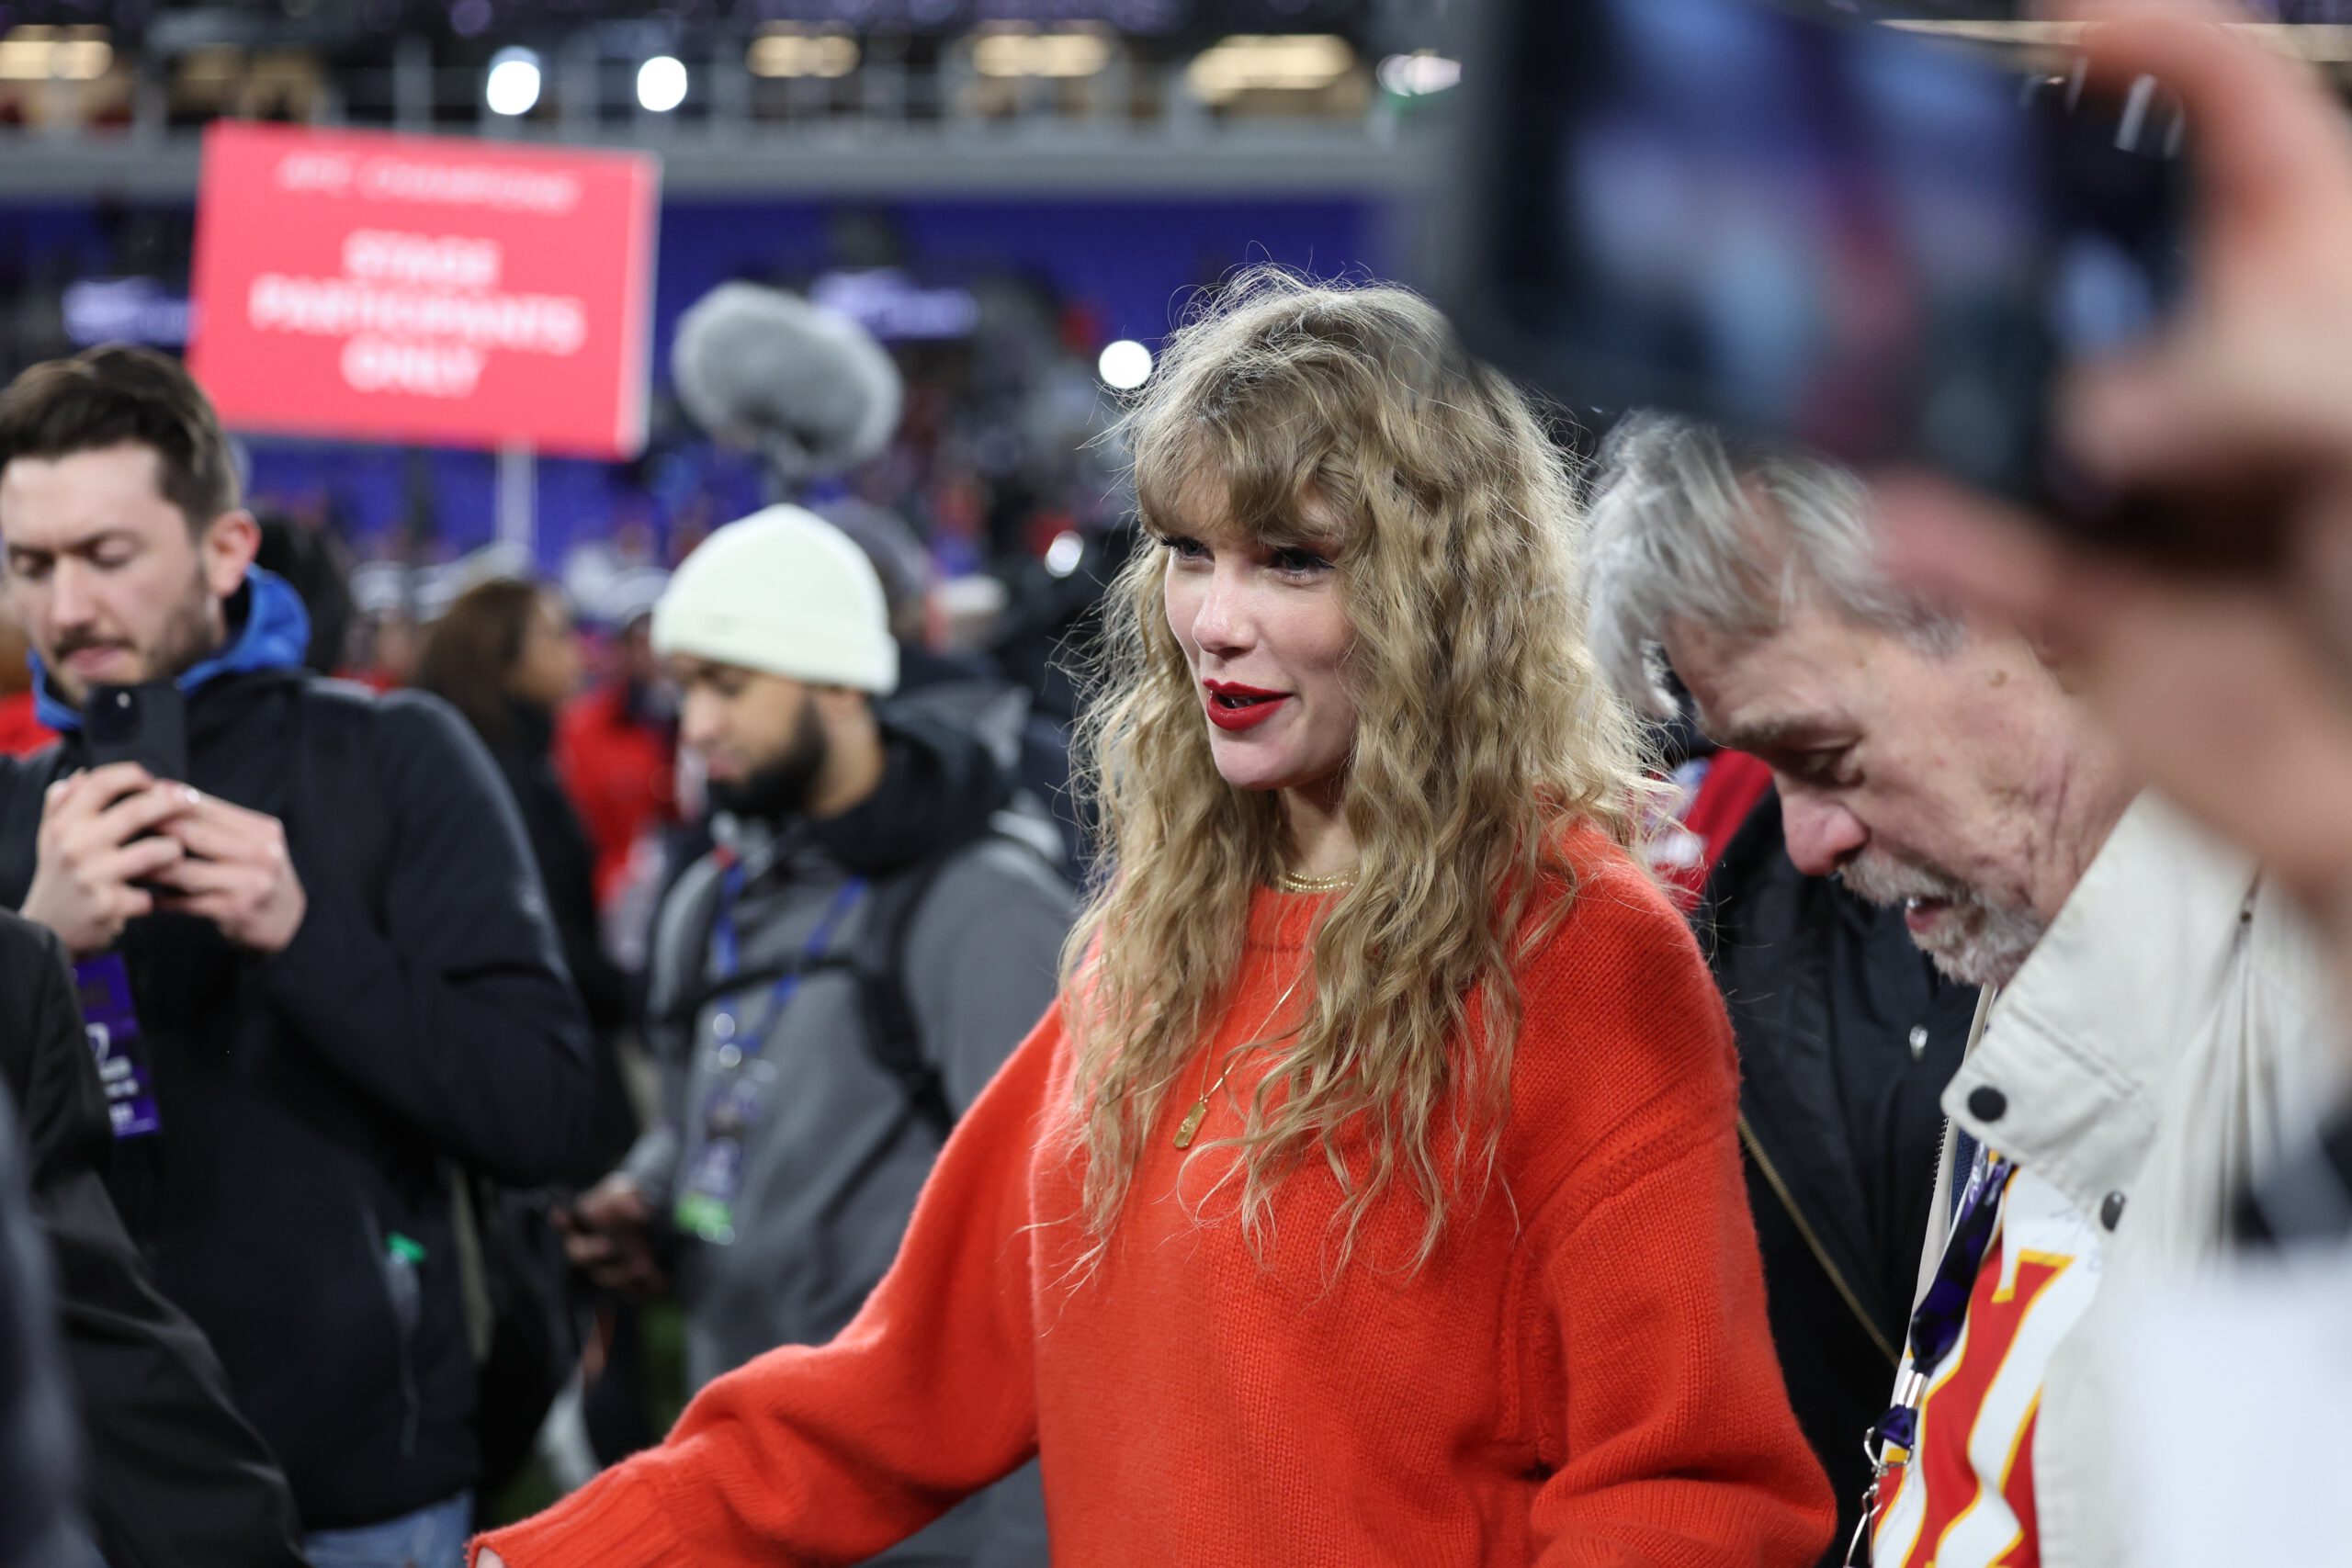 Taylor Swift walking across the football field in a red sweater. 